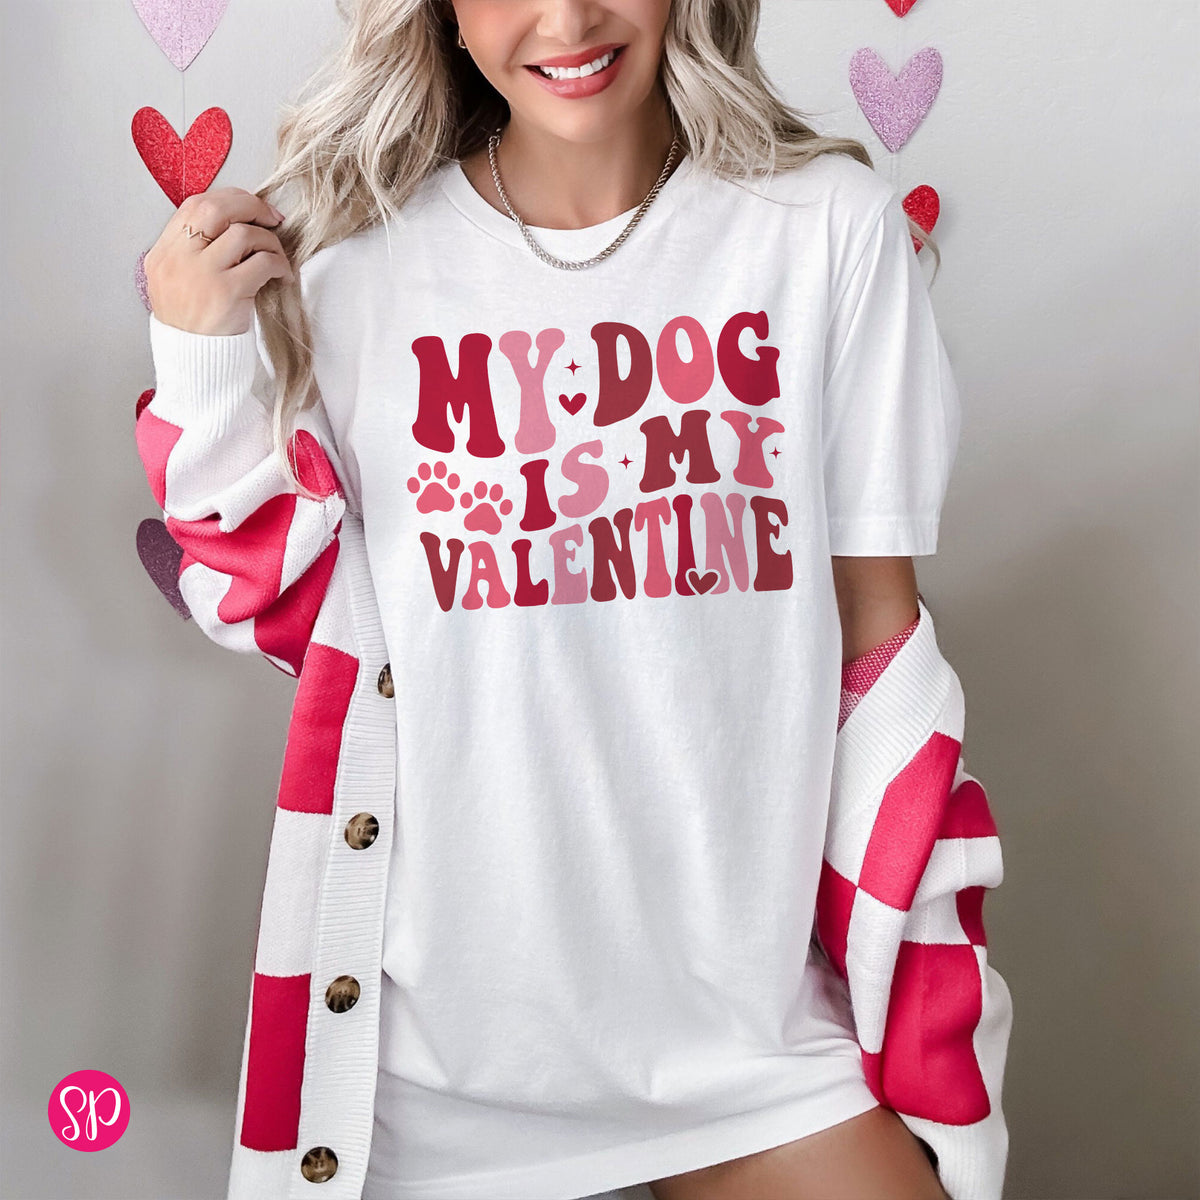 My Dog is My Valentine (Groovy Text) Unisex T-Shirt